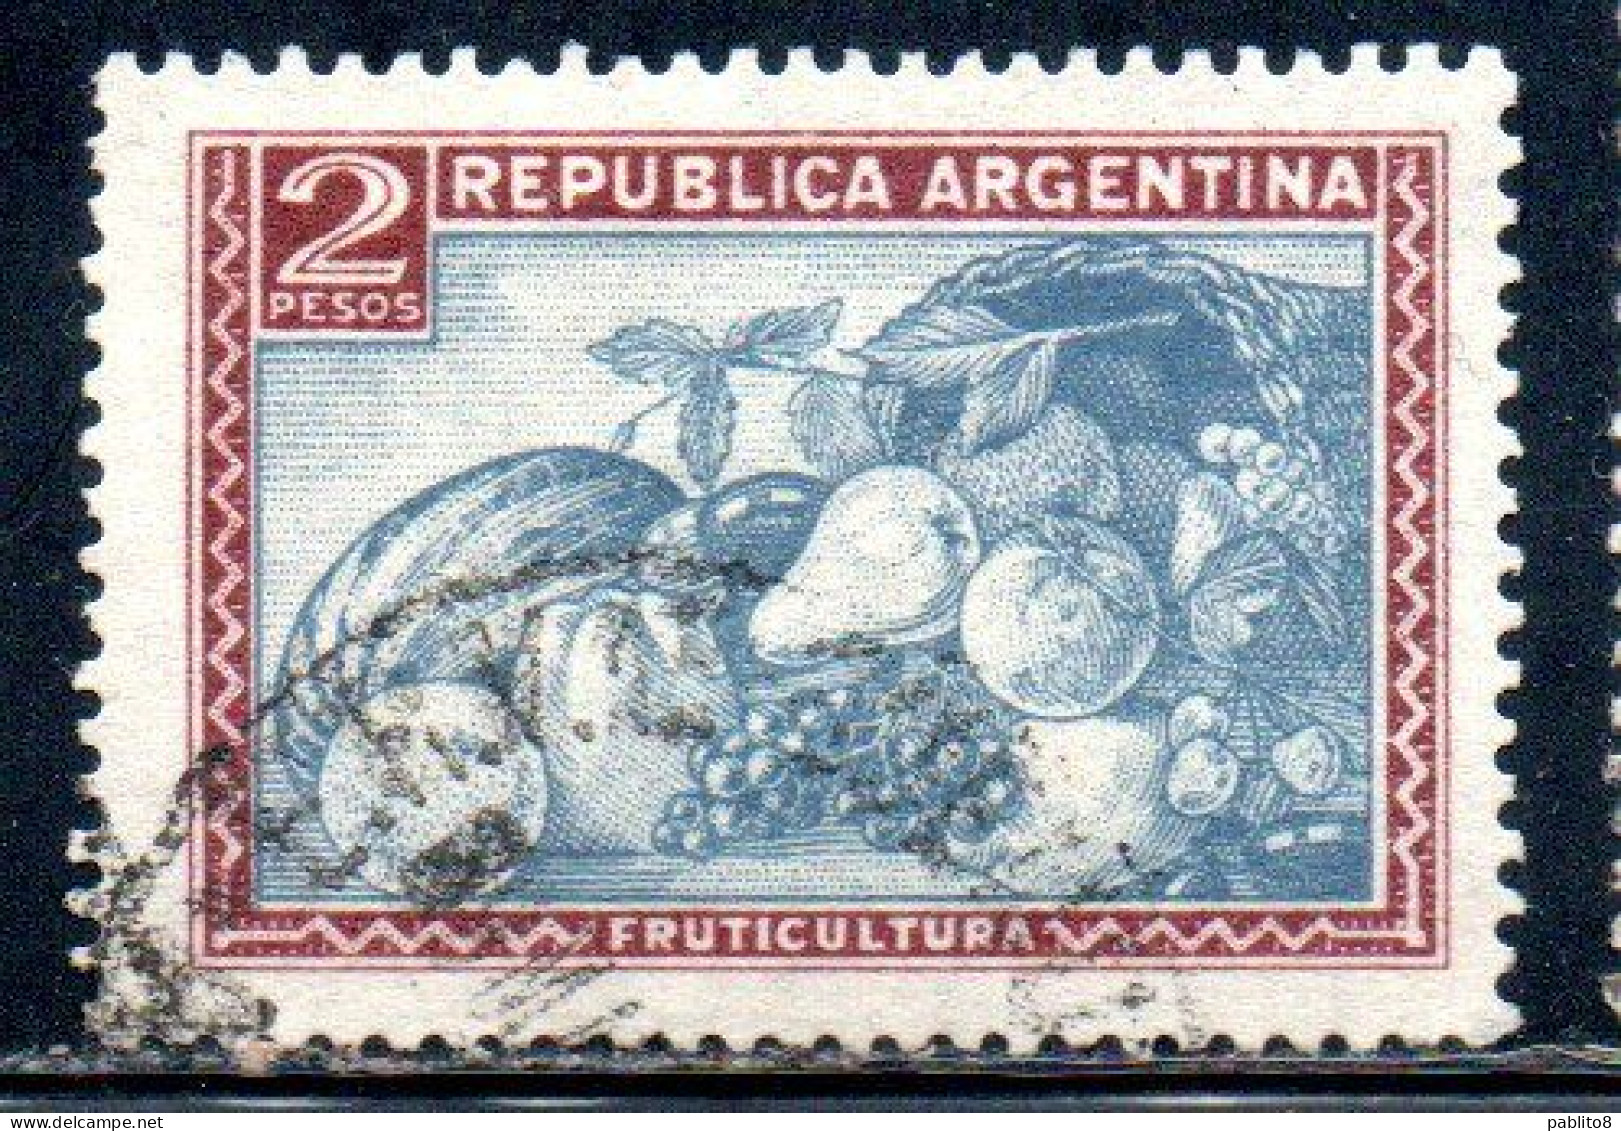 ARGENTINA 1942 1950 1949 FRUIT 2p USED USADO OBLITERE' - Used Stamps